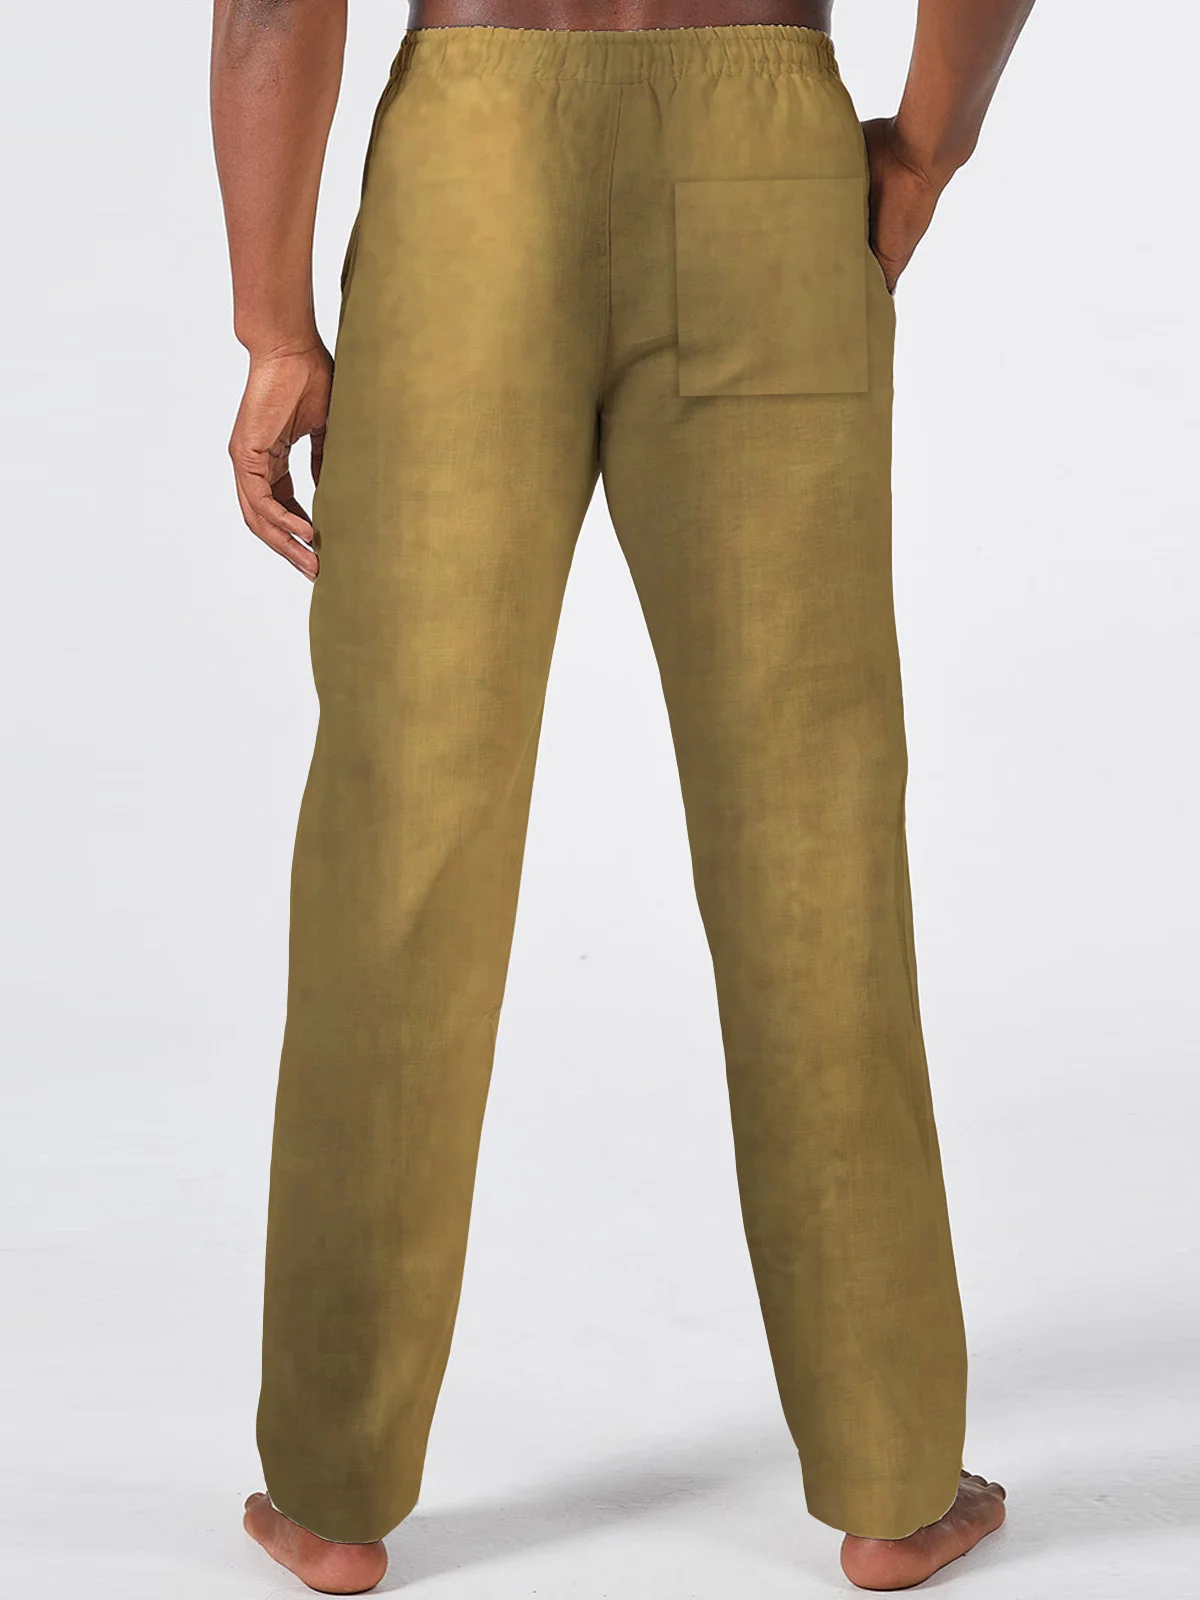 Royaura Retro Geometric Azcott Print Men's Casual Trousers